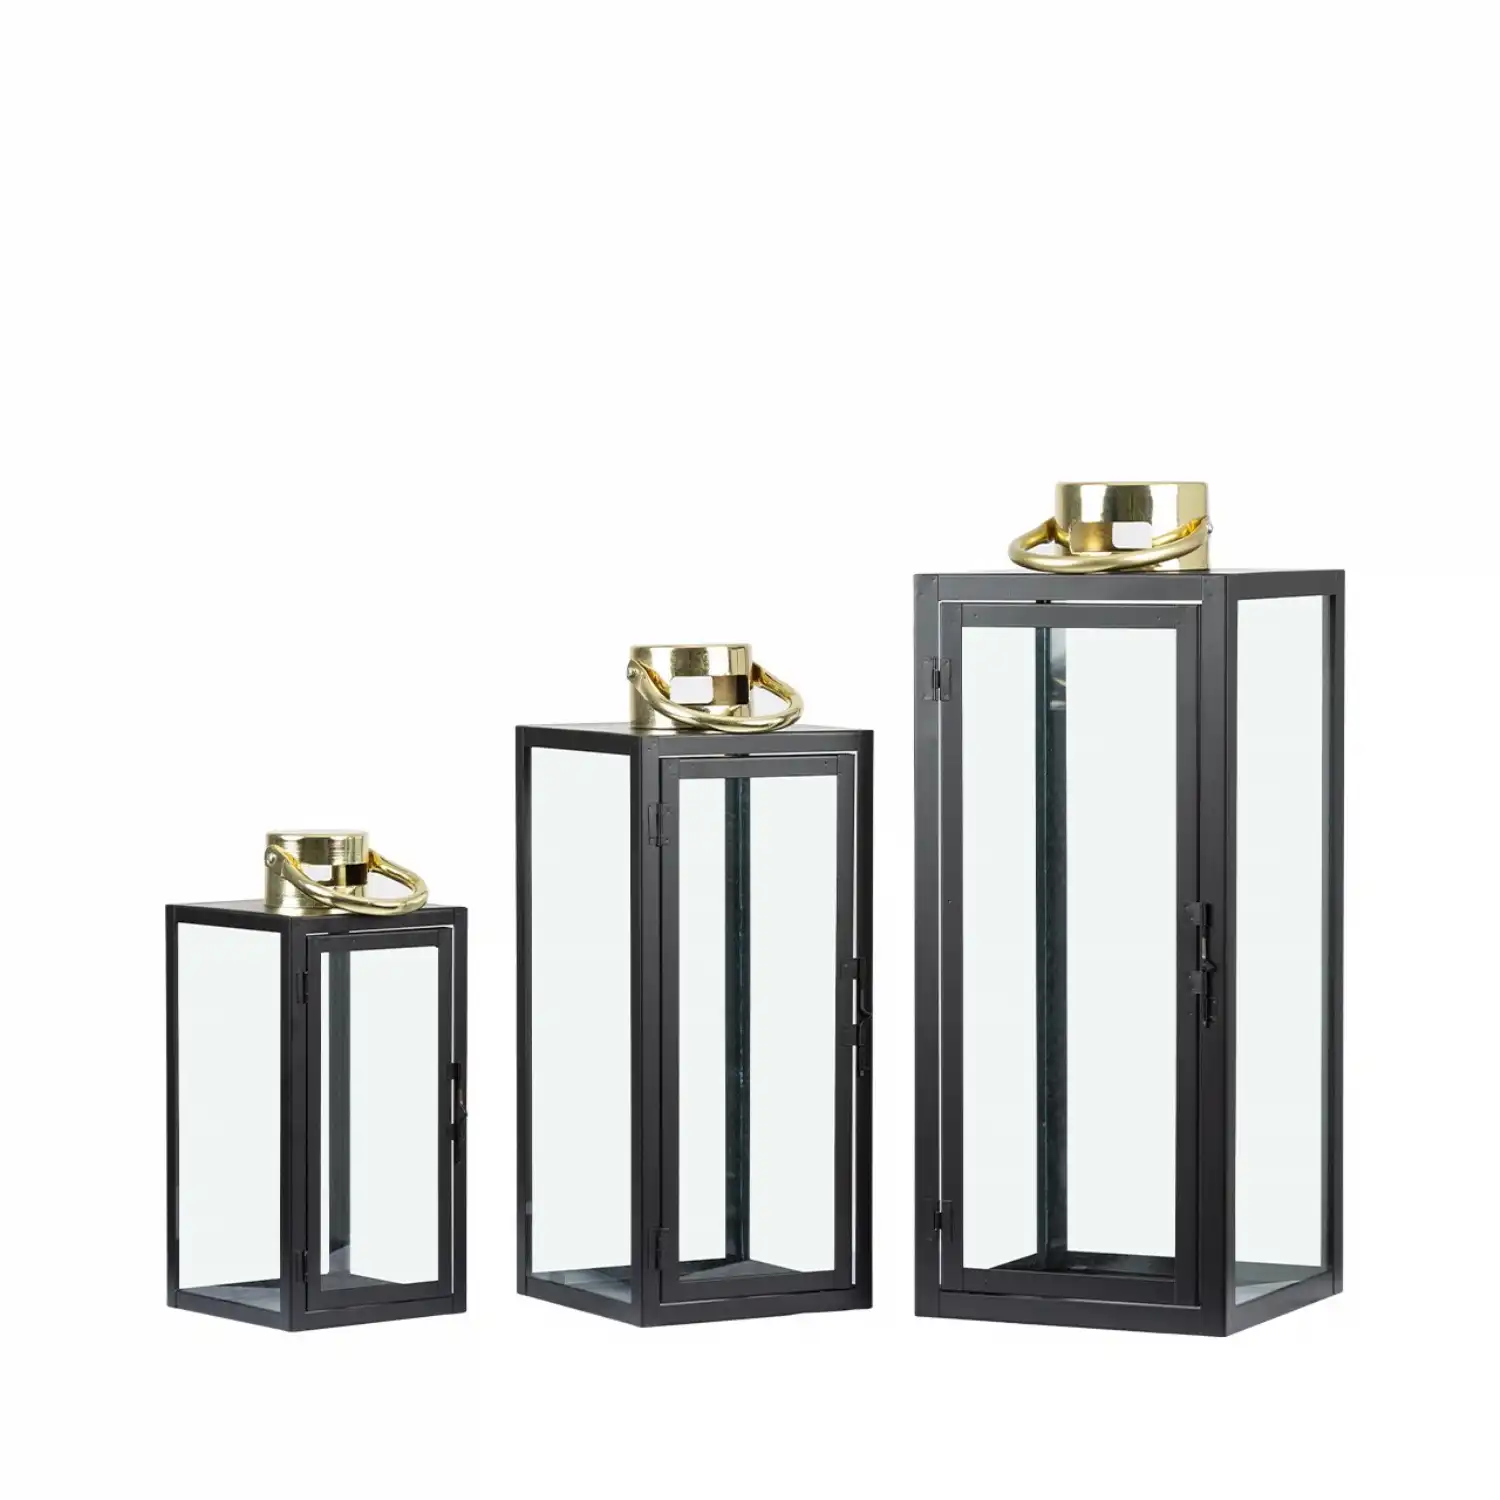 Set Of 3 Black And Gold Steel Lanterns